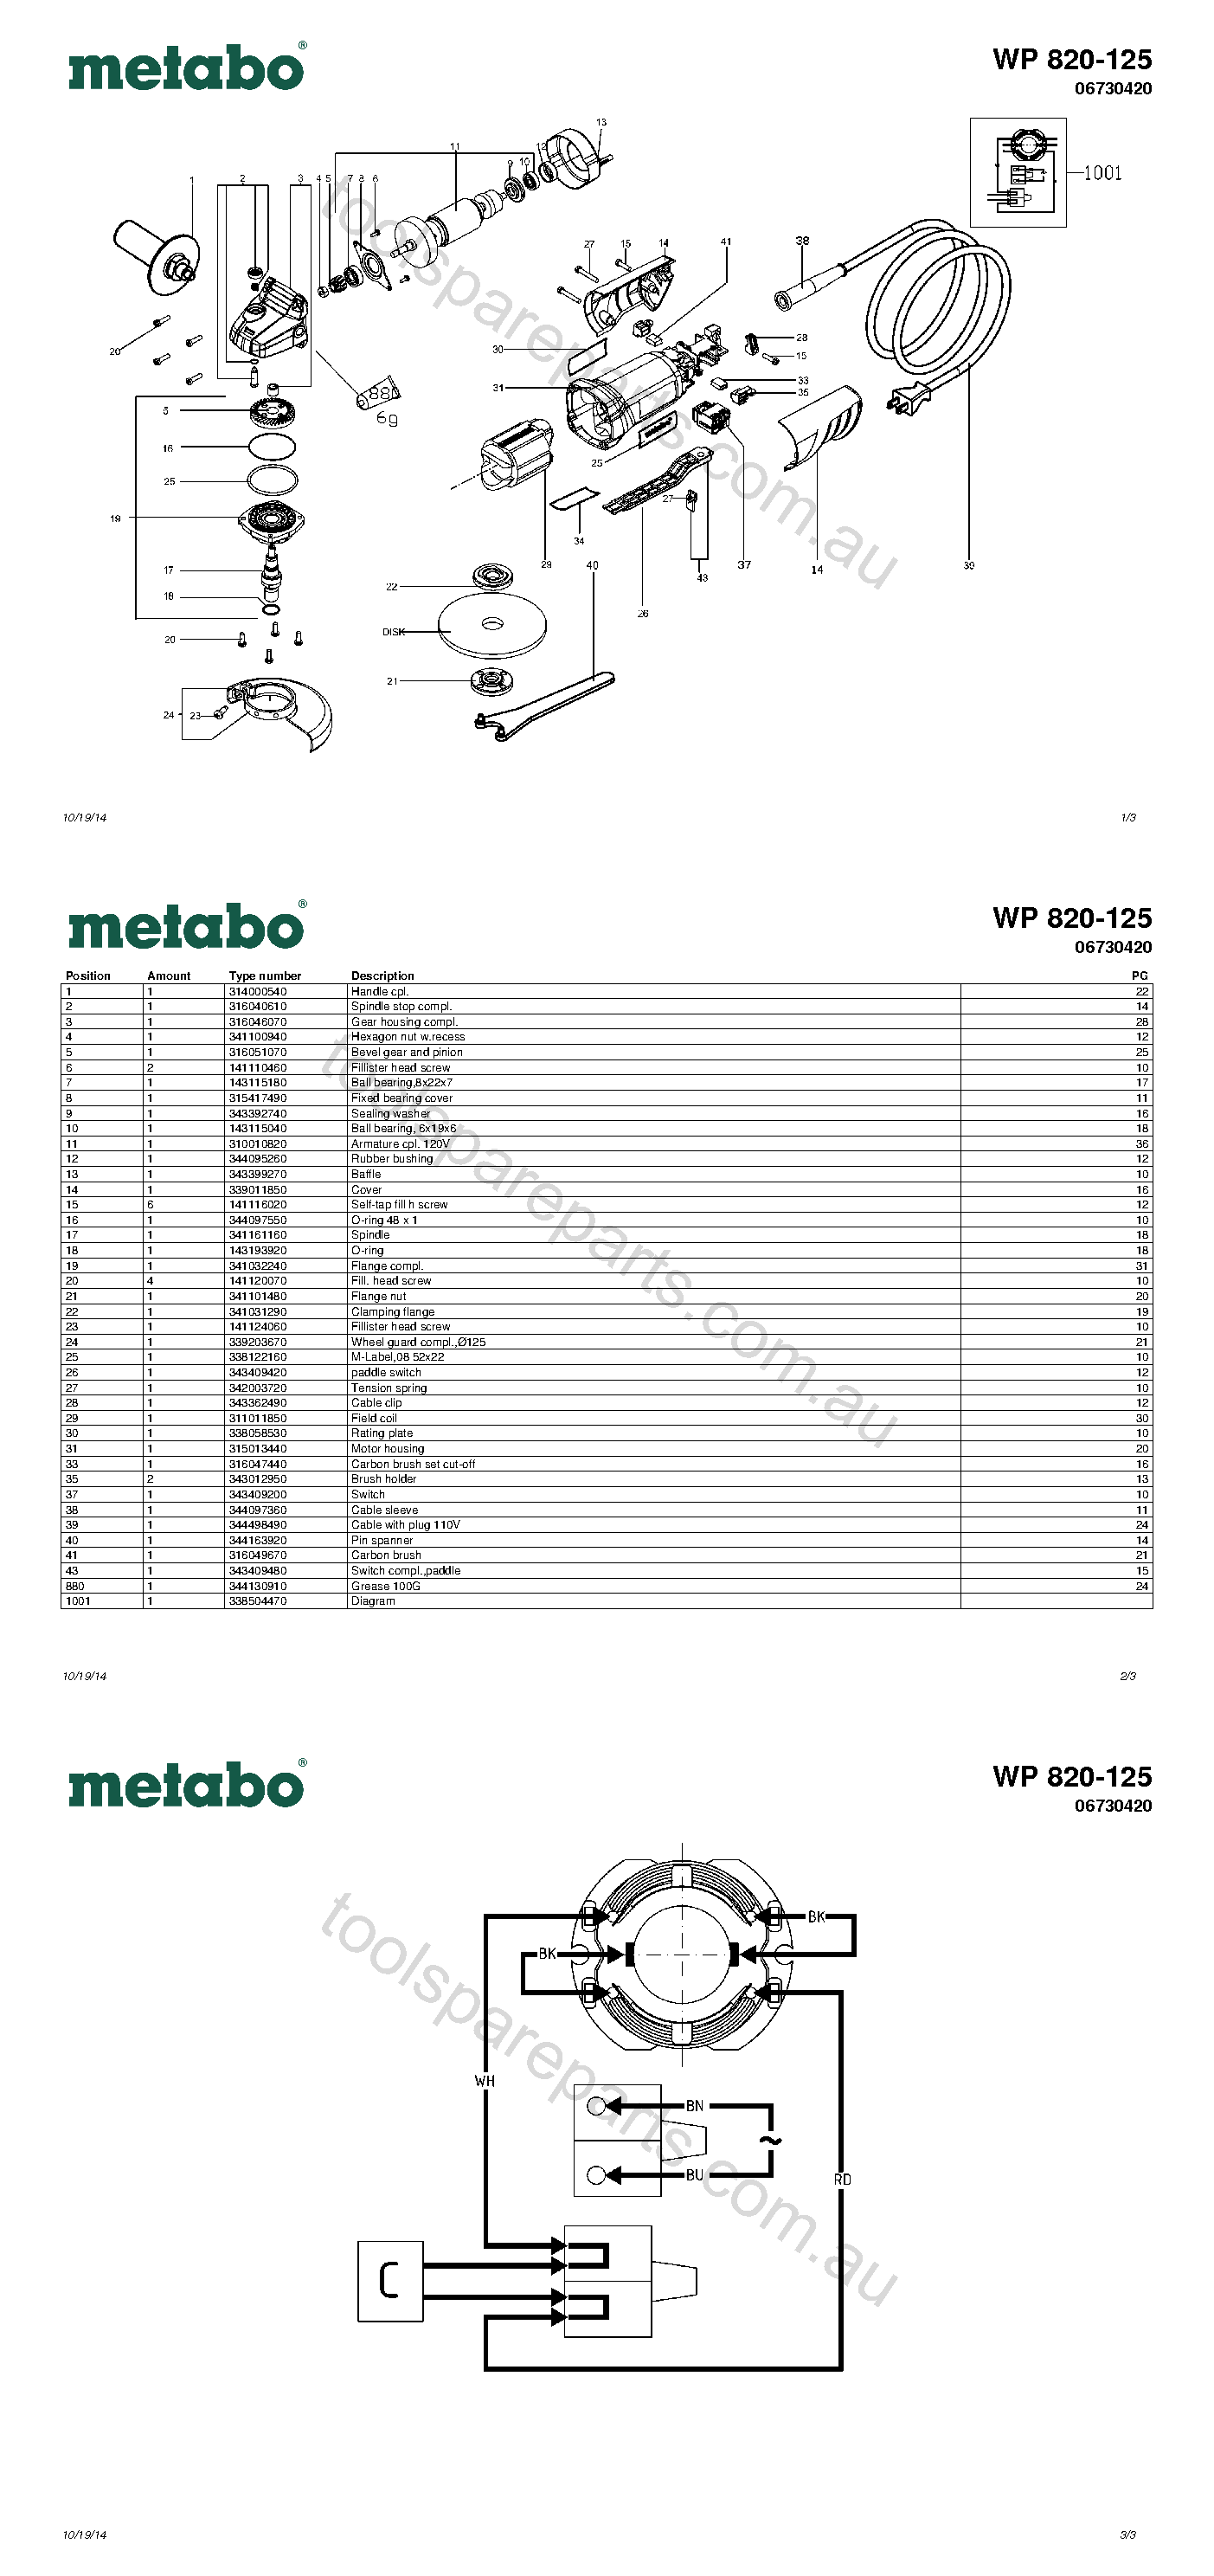 Metabo WP 820-125 06730420  Diagram 1